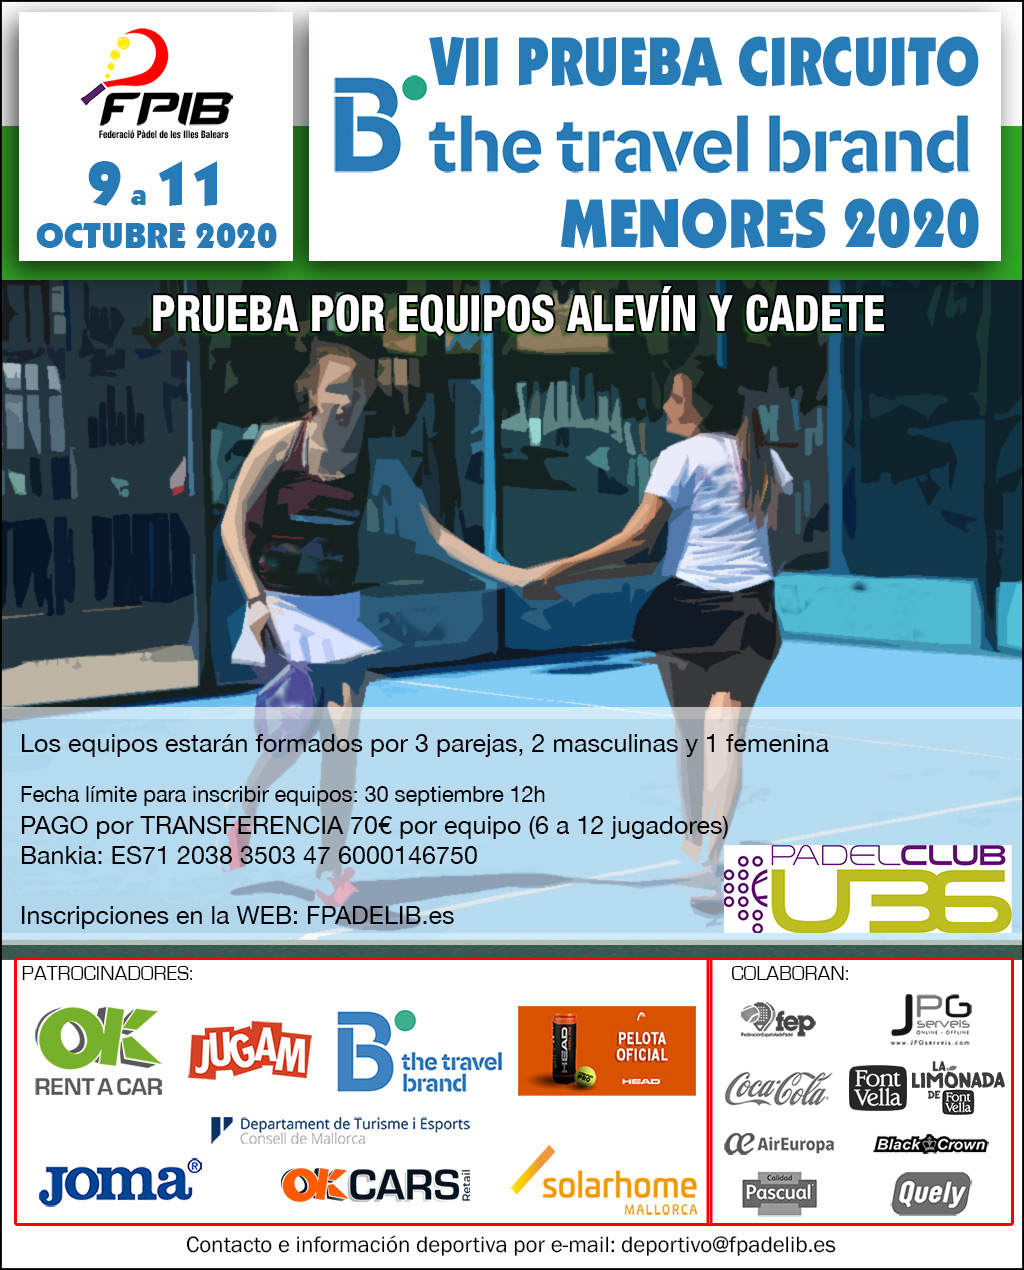 VII Prueba Circuito B the travel brand de menores - 2020